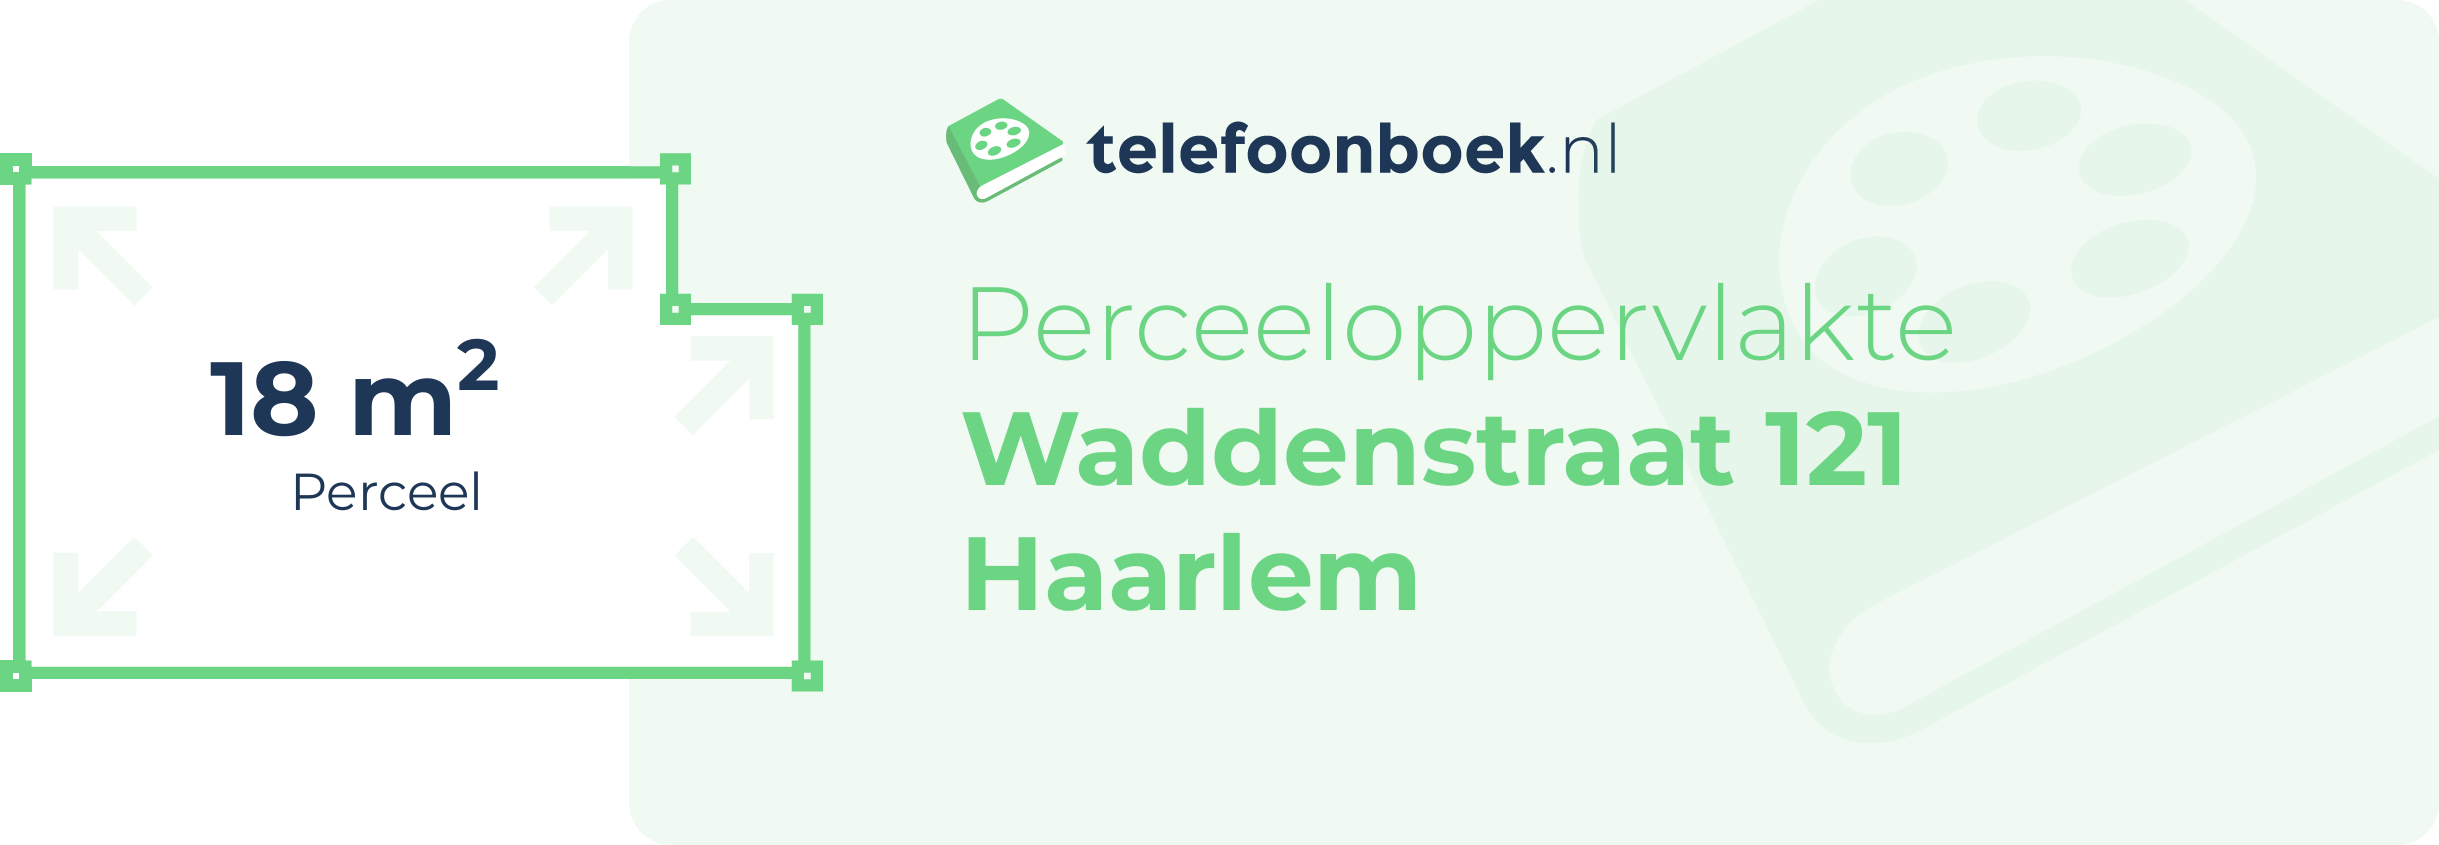 Perceeloppervlakte Waddenstraat 121 Haarlem